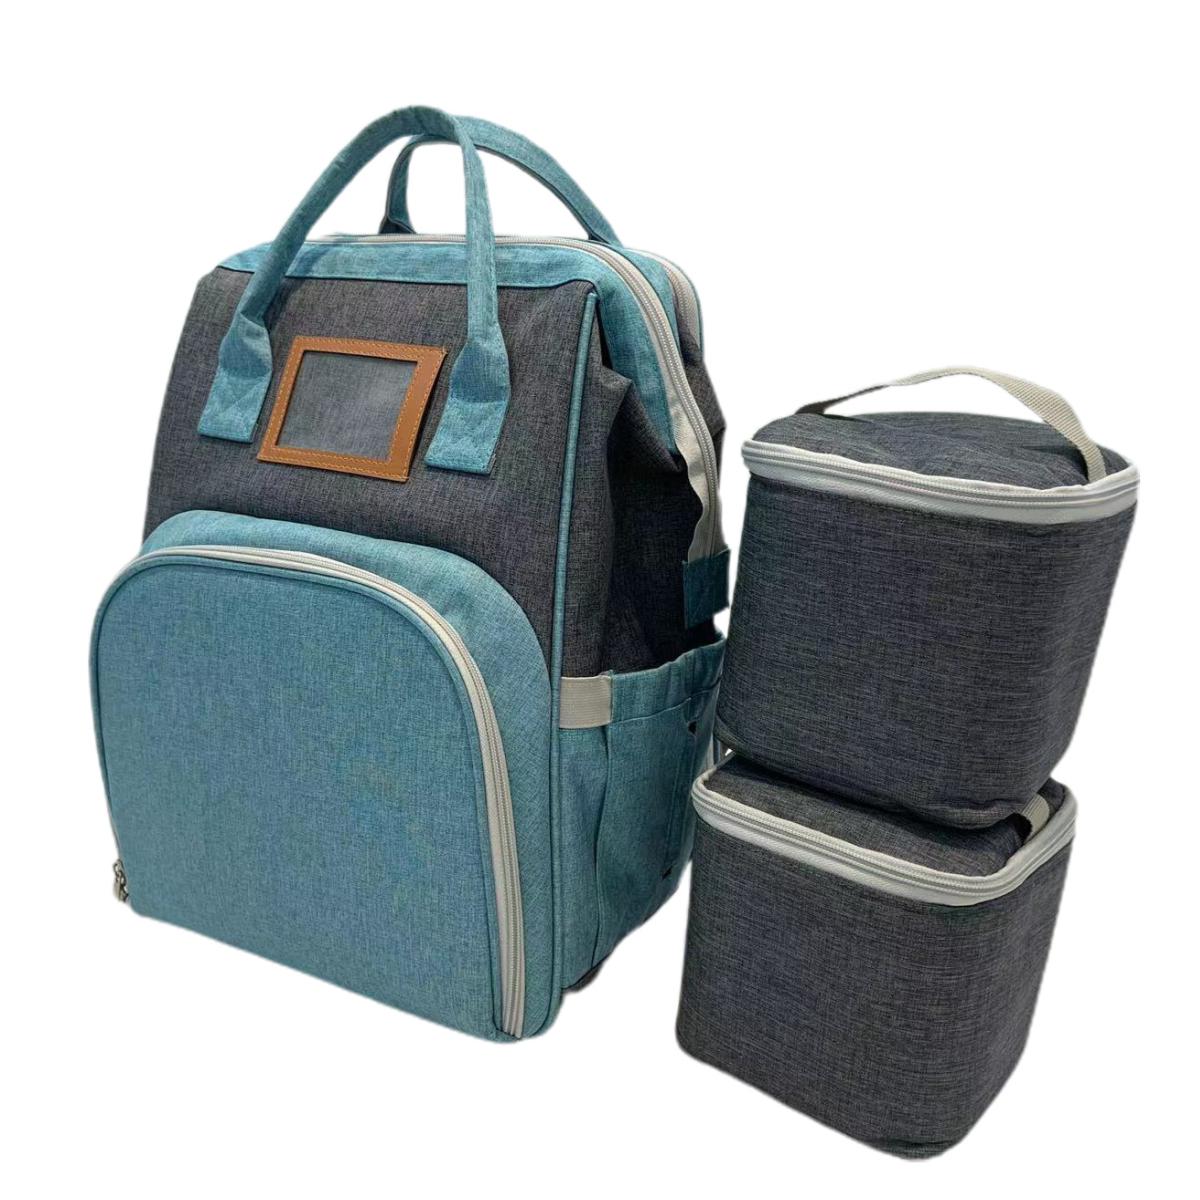 Dog Travel Bag Pet Supplies expandable Backpack,pet expandable Backpack,airline approved pet travel carrier